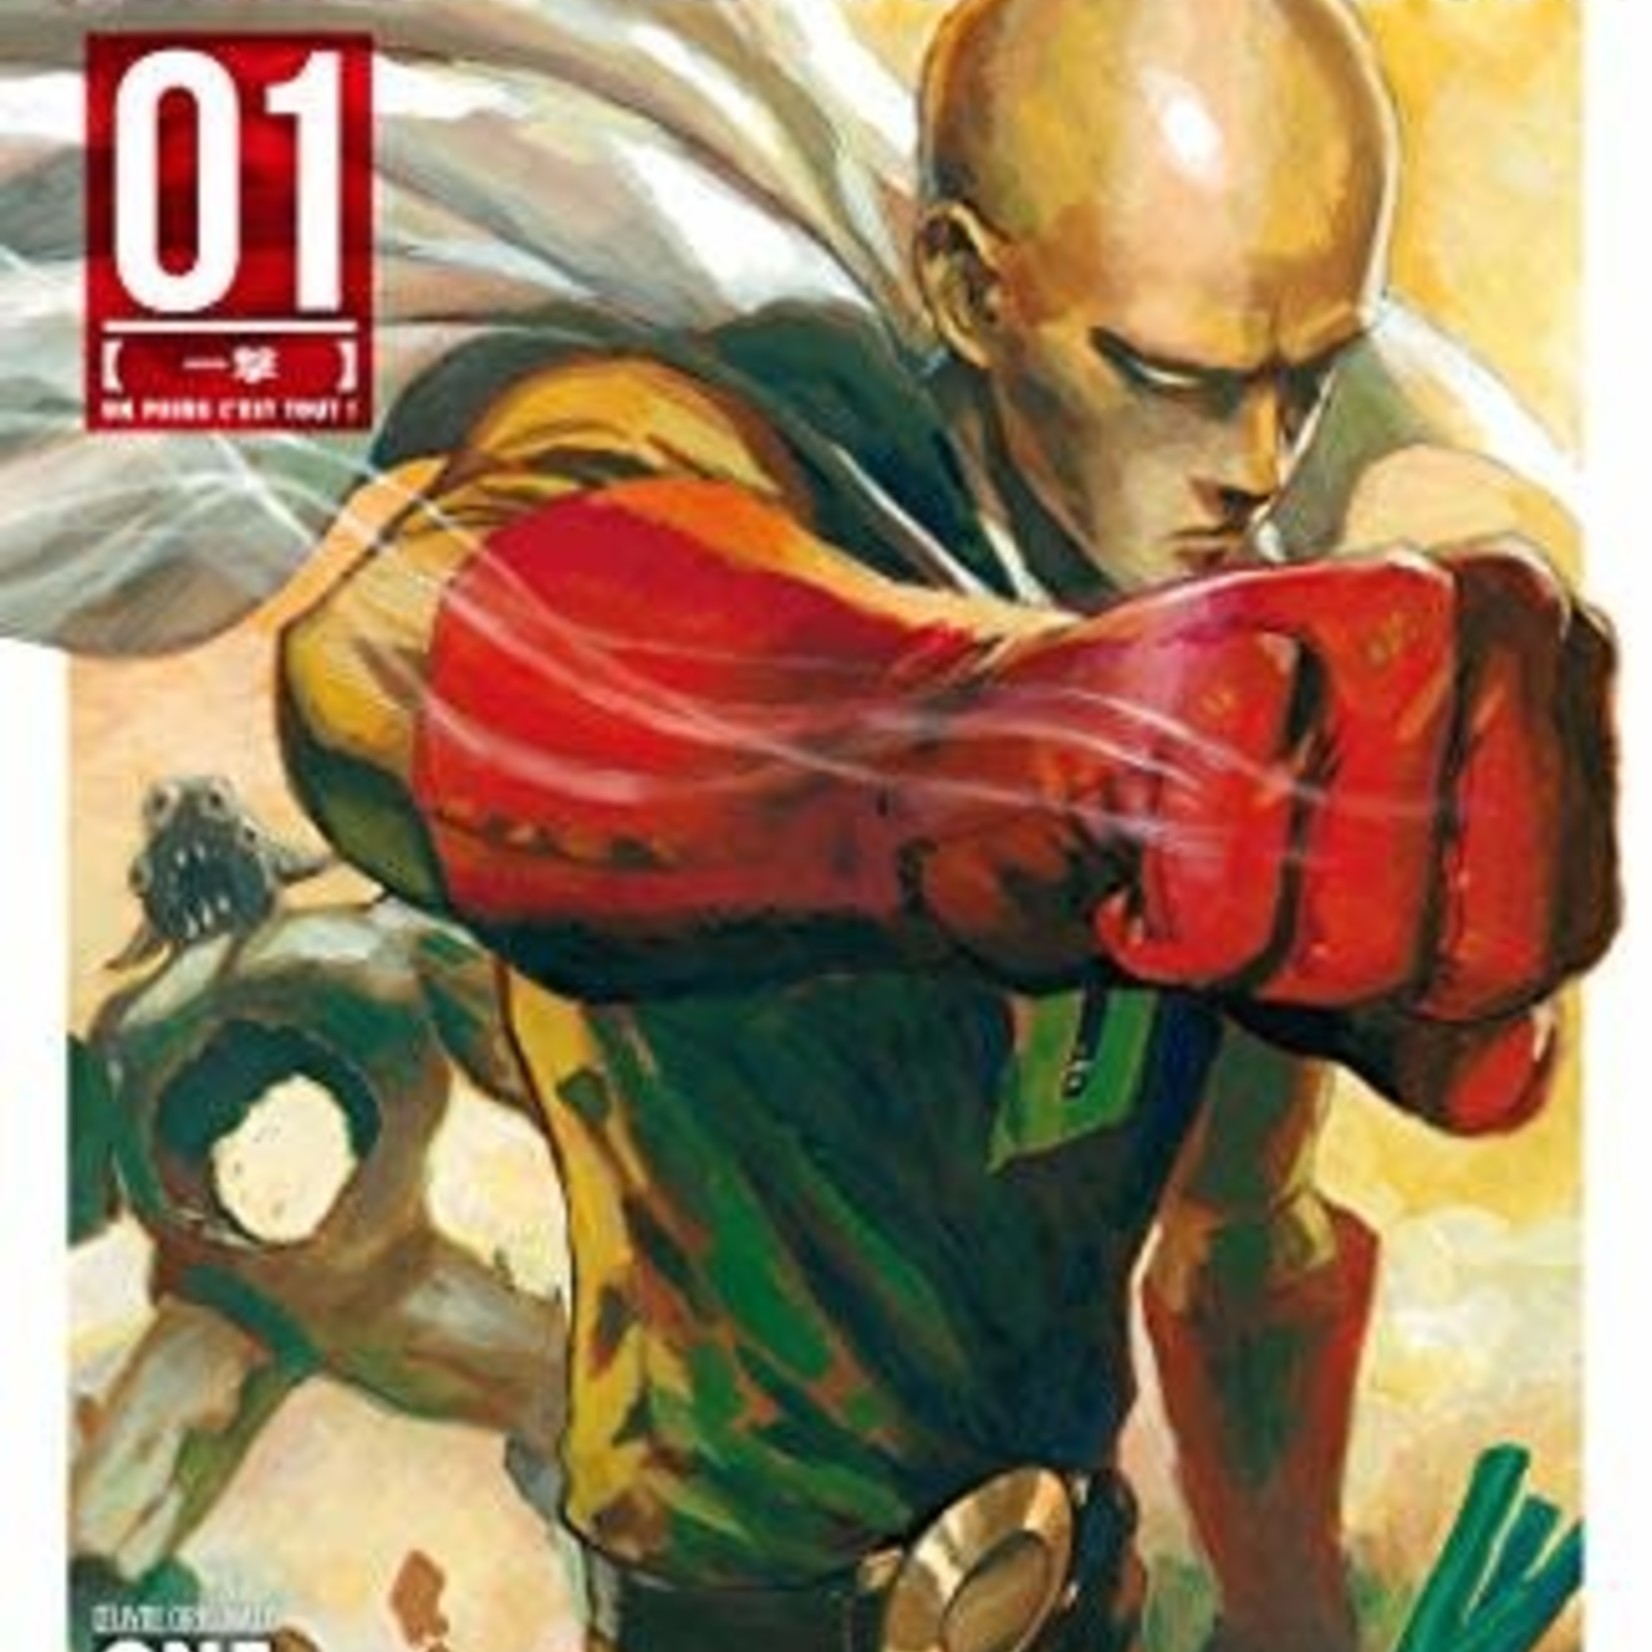 Kurokawa Manga - One Punch Man Tome 01